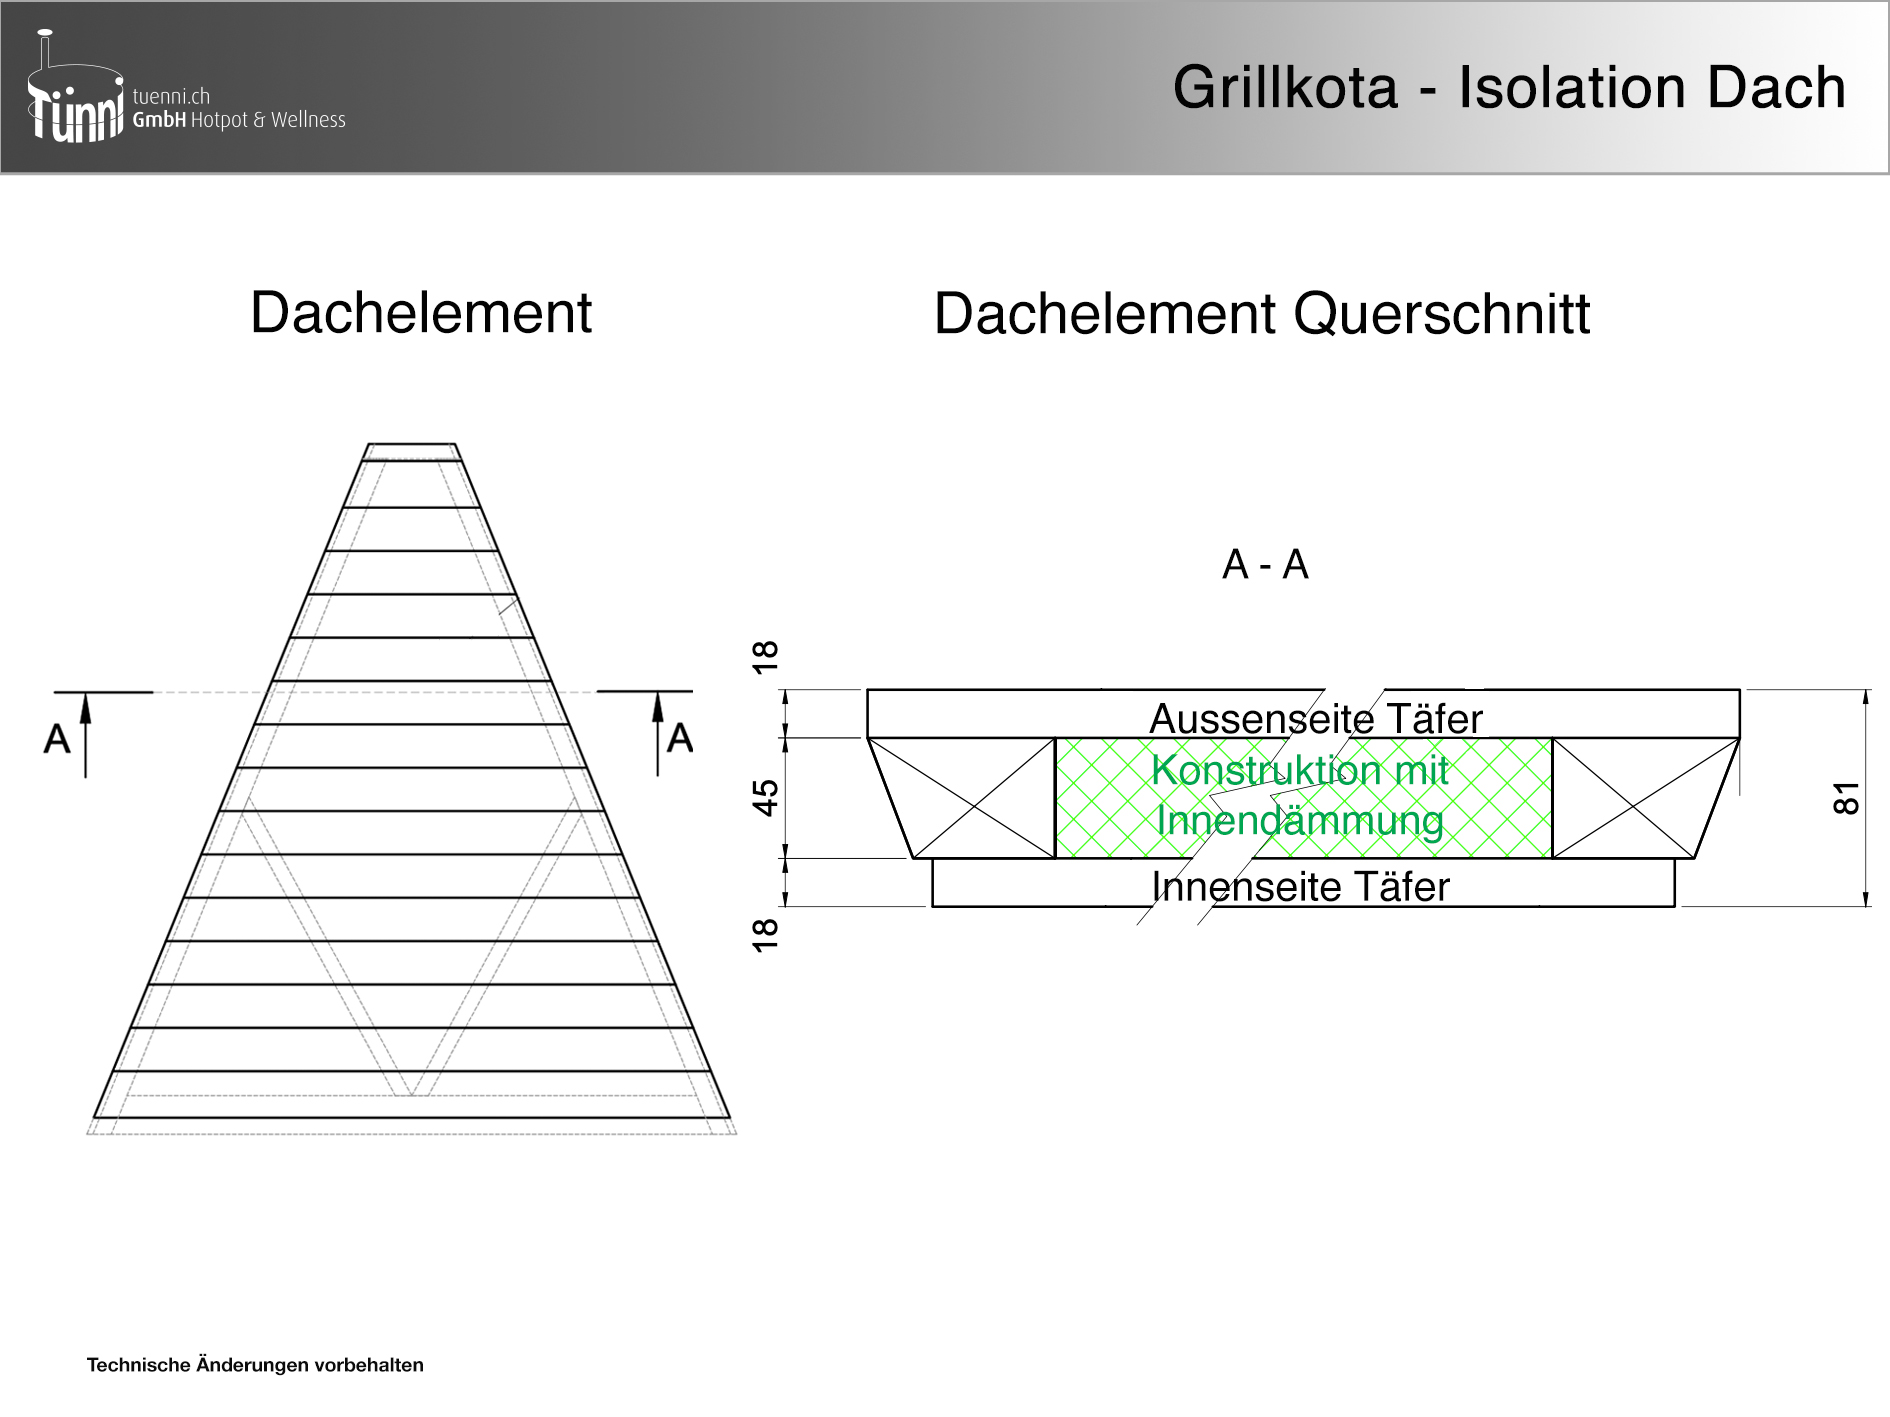 Grillkota_Isolation Dach